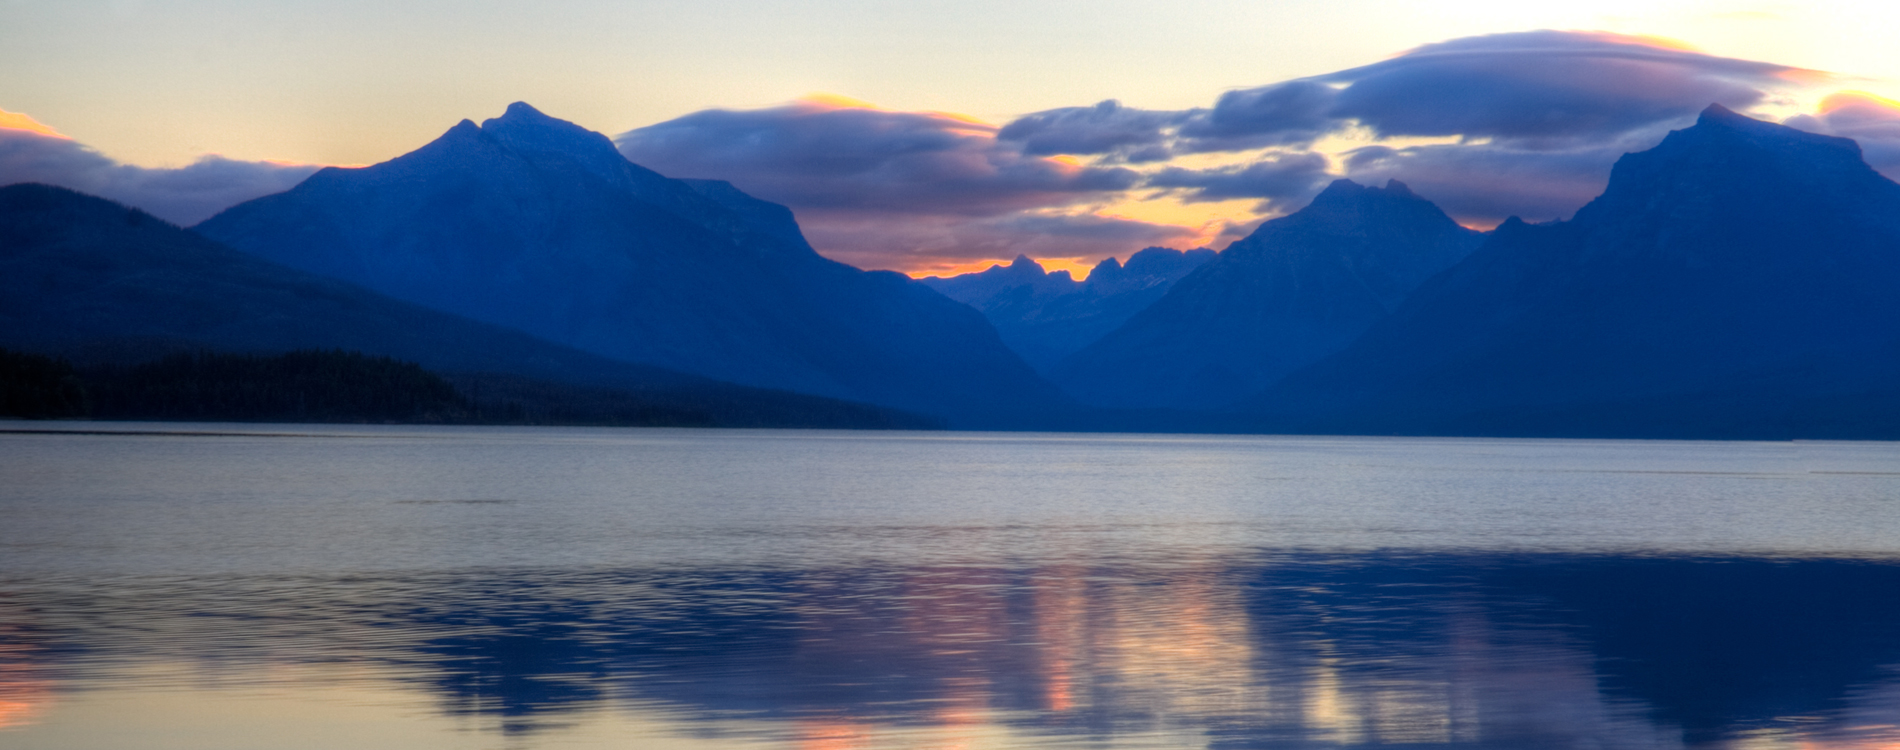 Glacier National Park - Sunrise on Lake McDonald